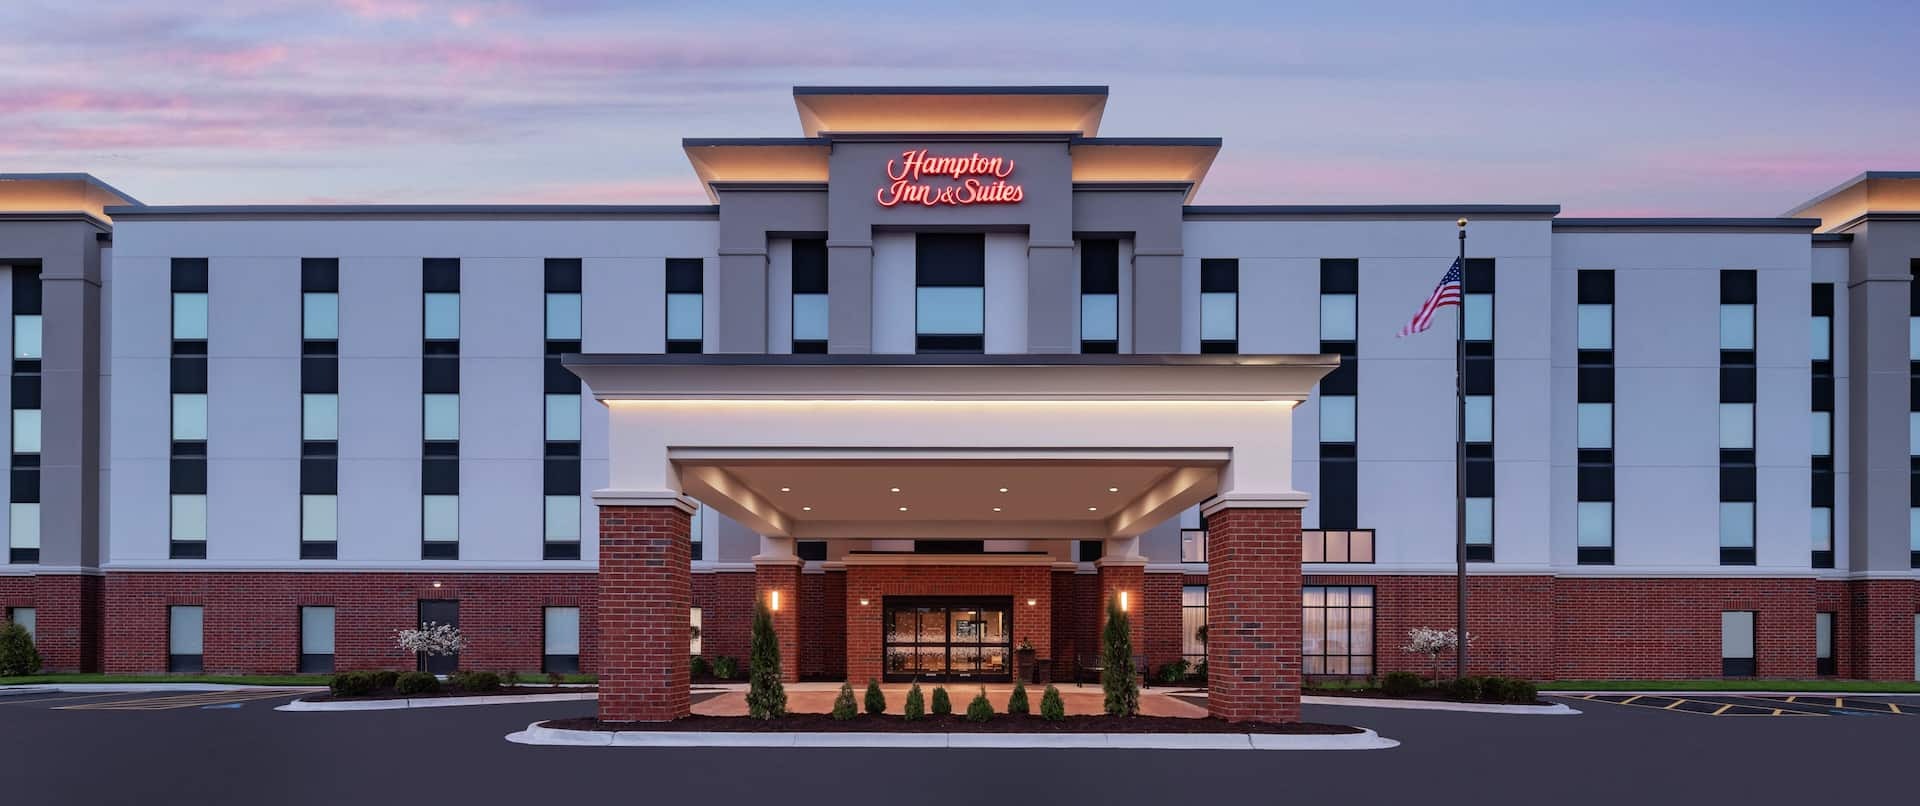 Photo of Hampton Inn & Suites Bridgeview Chicago, Bridgeview, IL